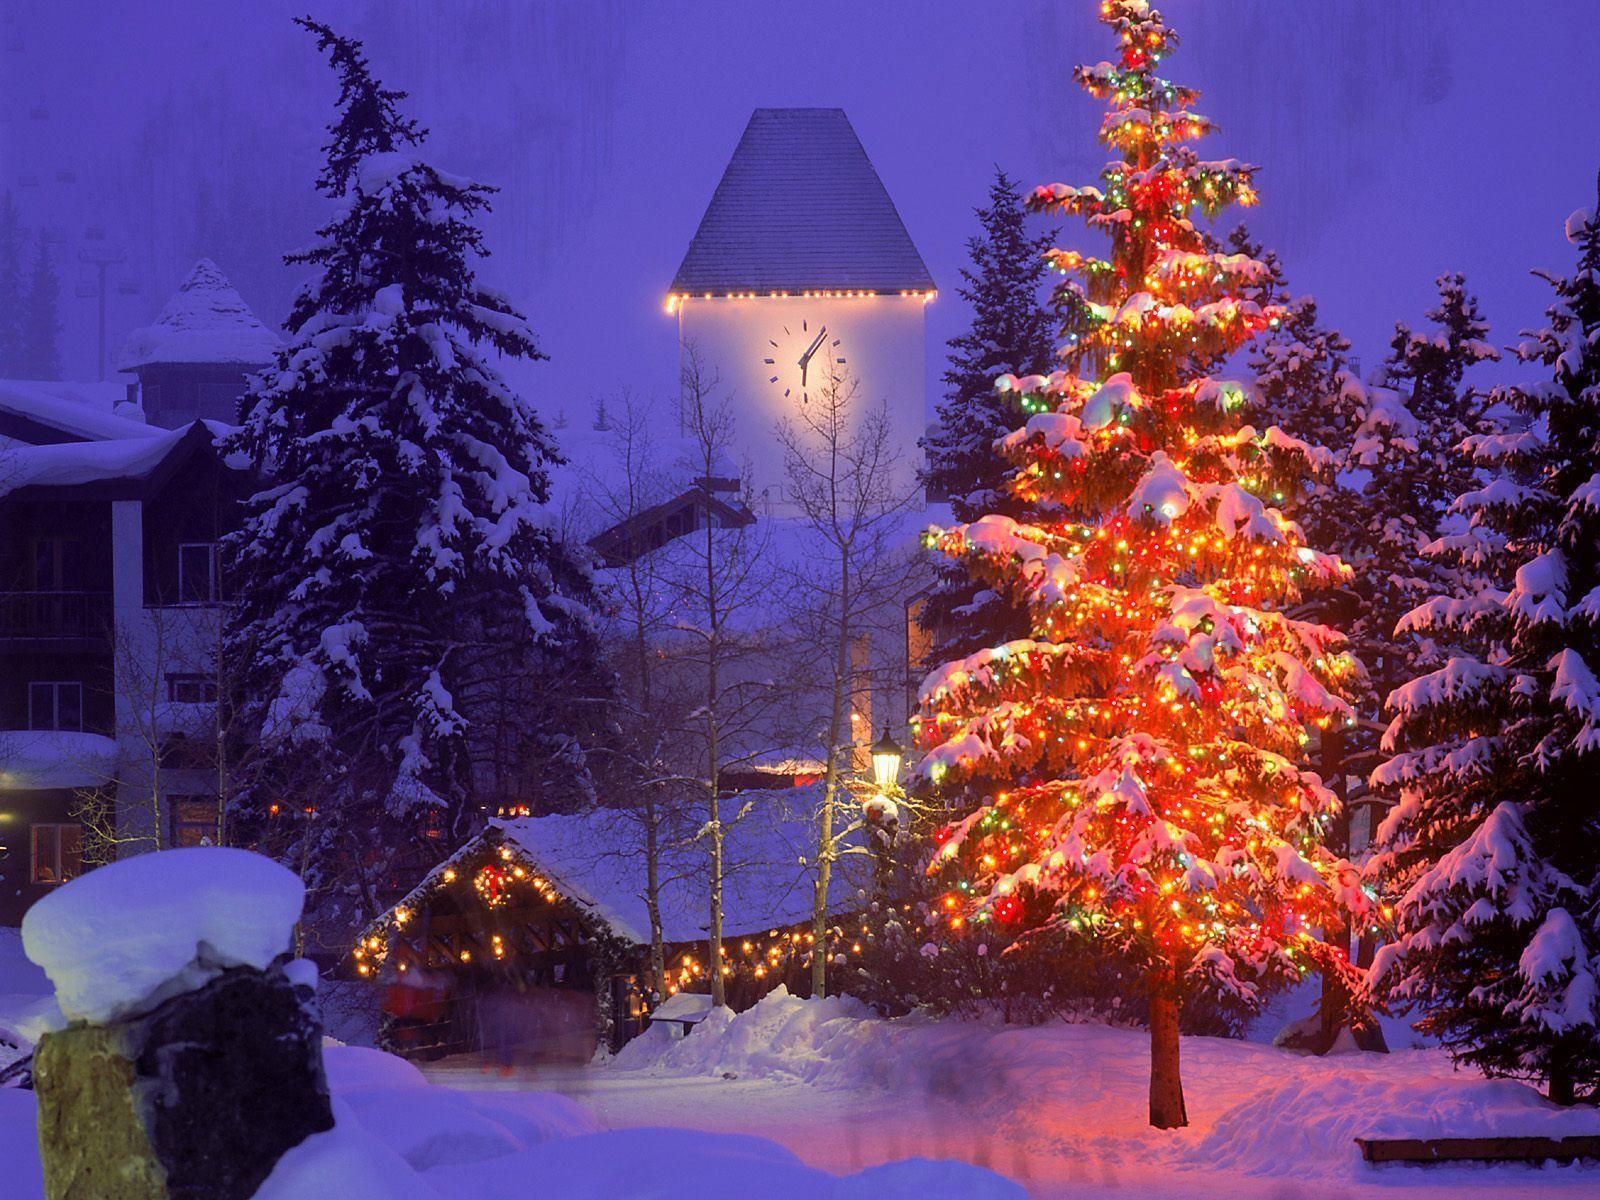 Free Beautiful Christmas Tree in Christmas Village wallpaper